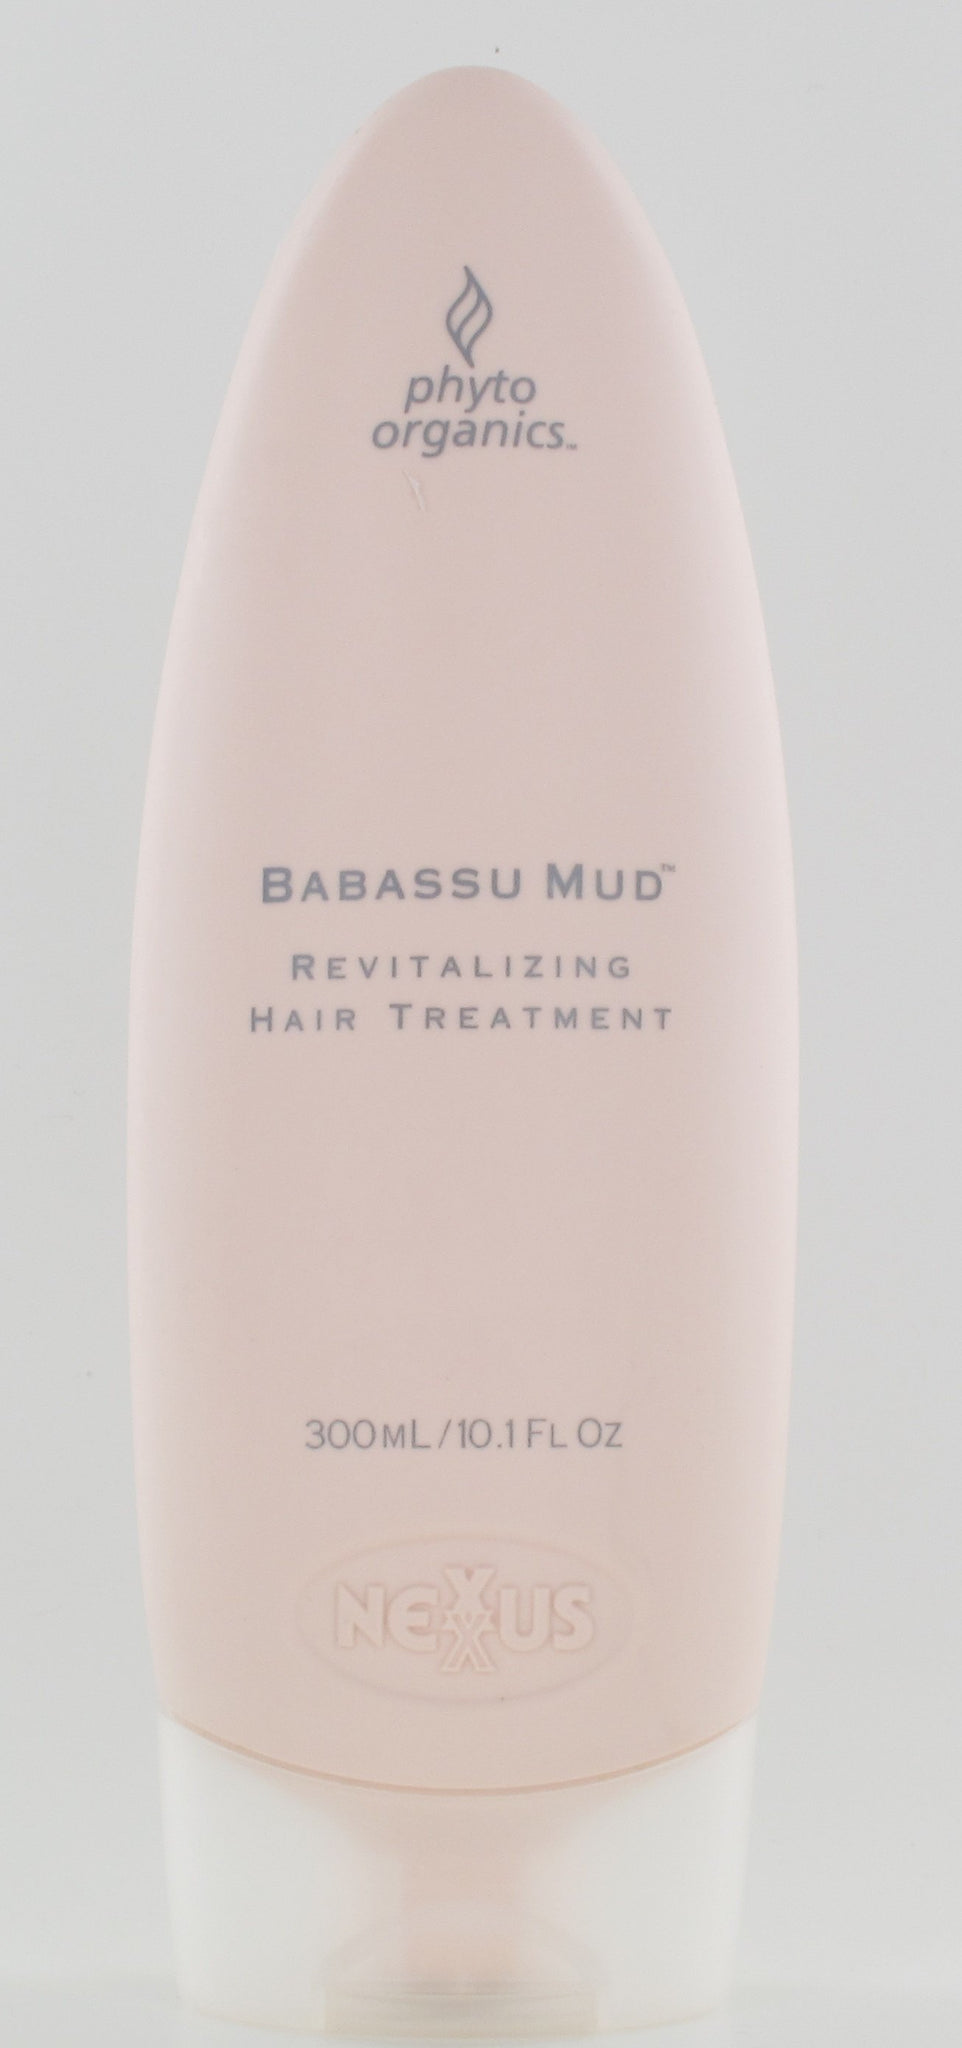 Phyto Organics Babassu Mud Revitalizing Hair Treatment 10.1 fl oz